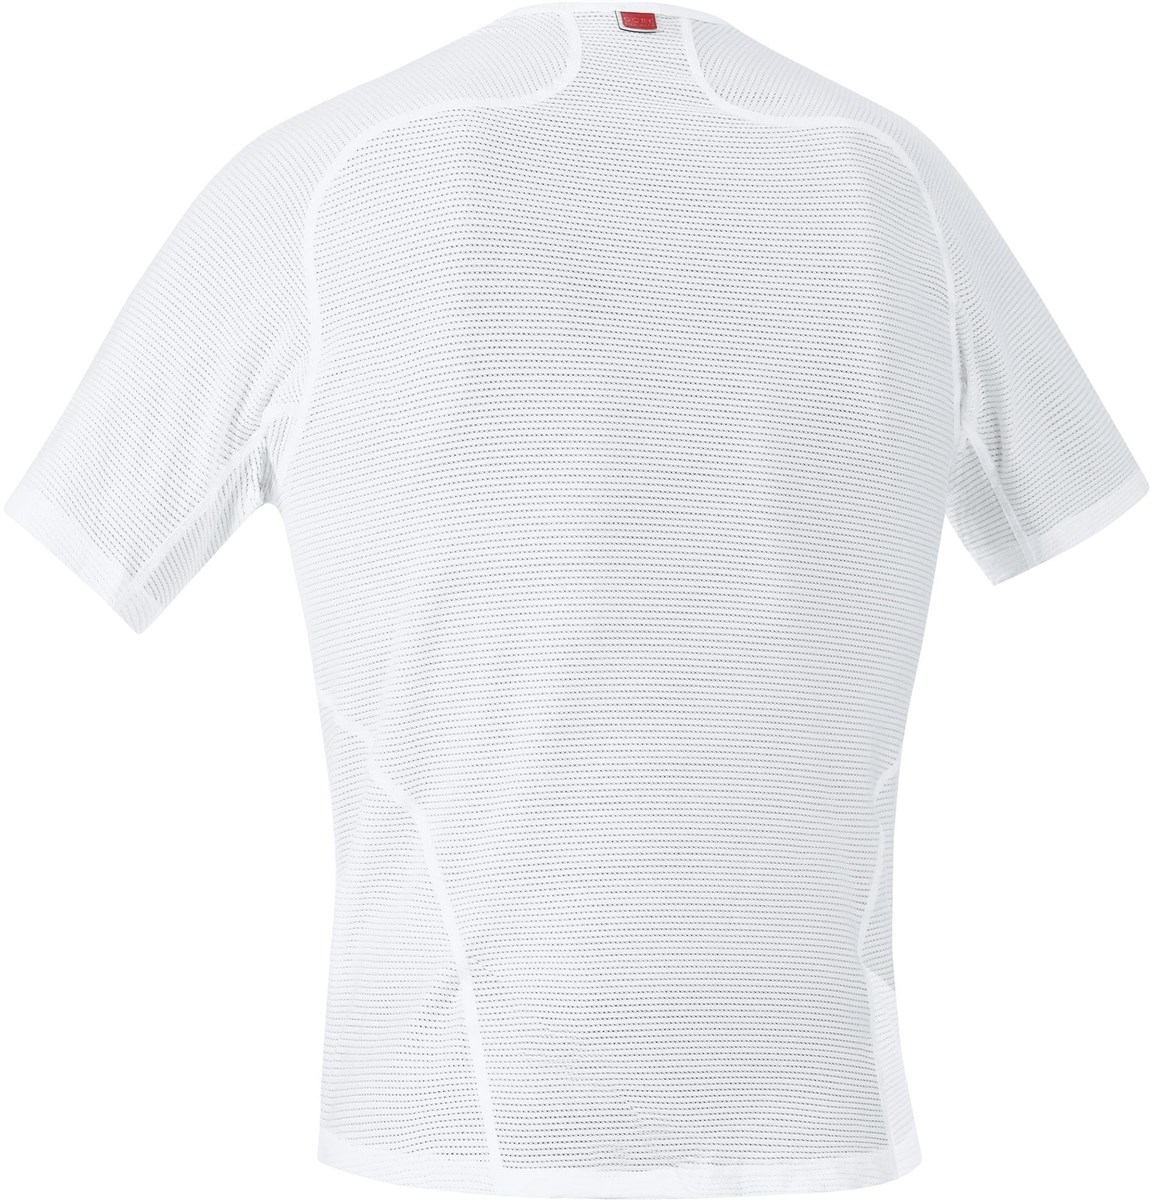 Gore Base Layer Shirt SS17